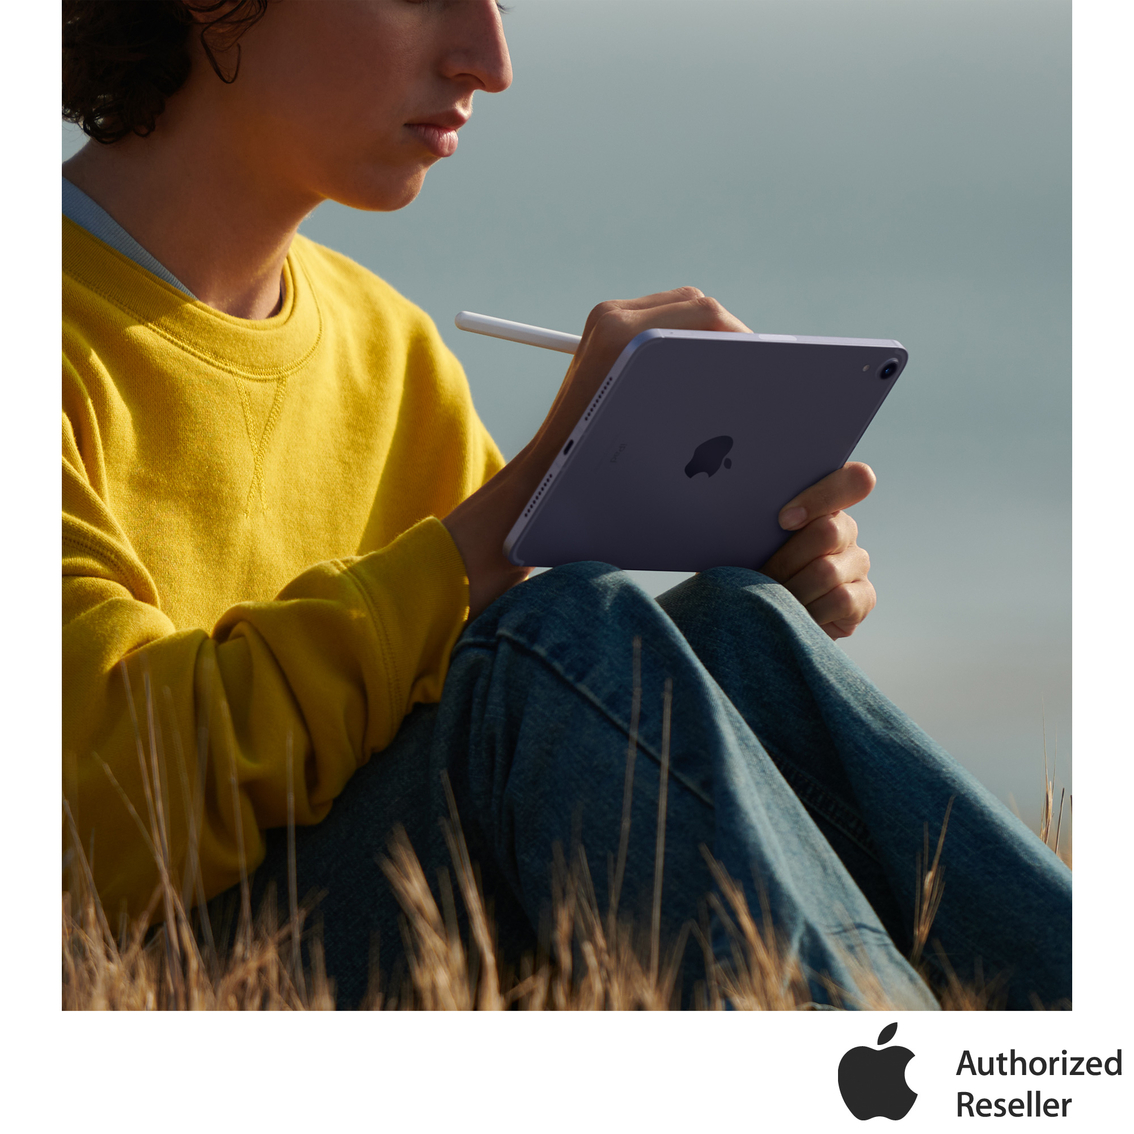 Apple iPad Mini 256GB with Wifi plus Cellular (Latest Model) - Image 6 of 8